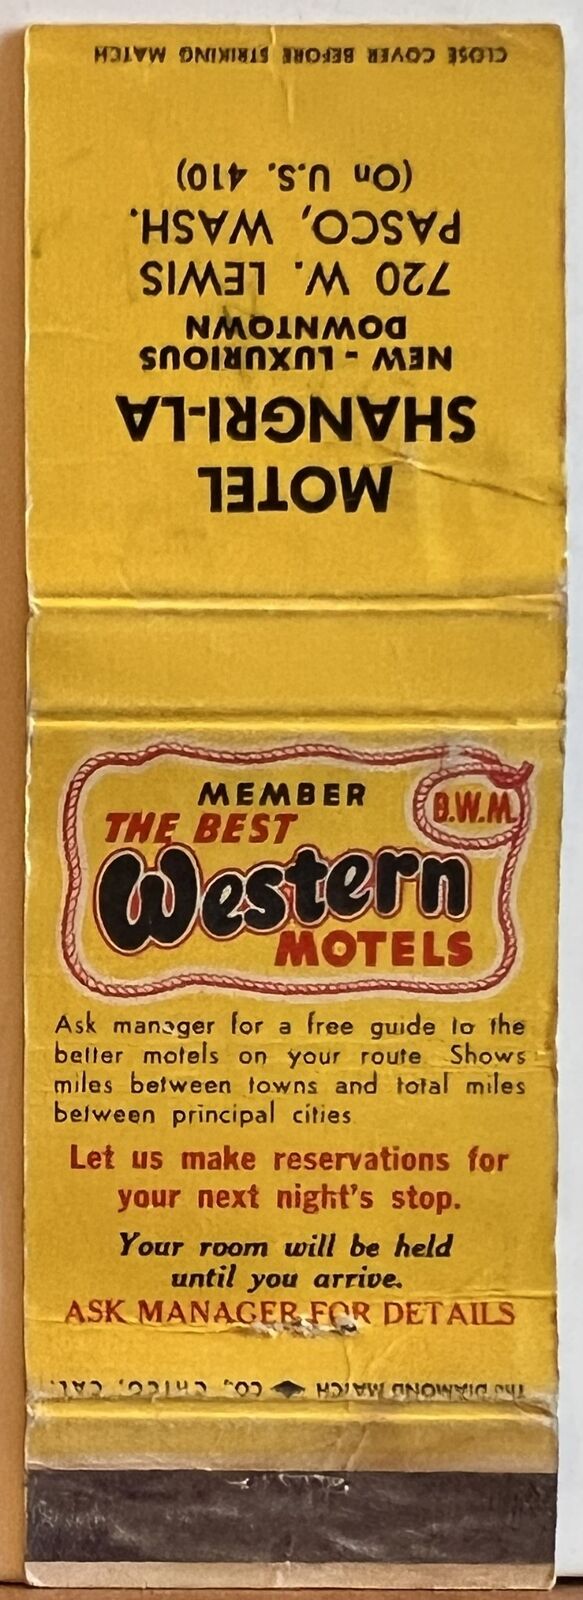 Motel Shangri-La Pasco WA Washington Best Western Motels Vintage Matchbook Cover